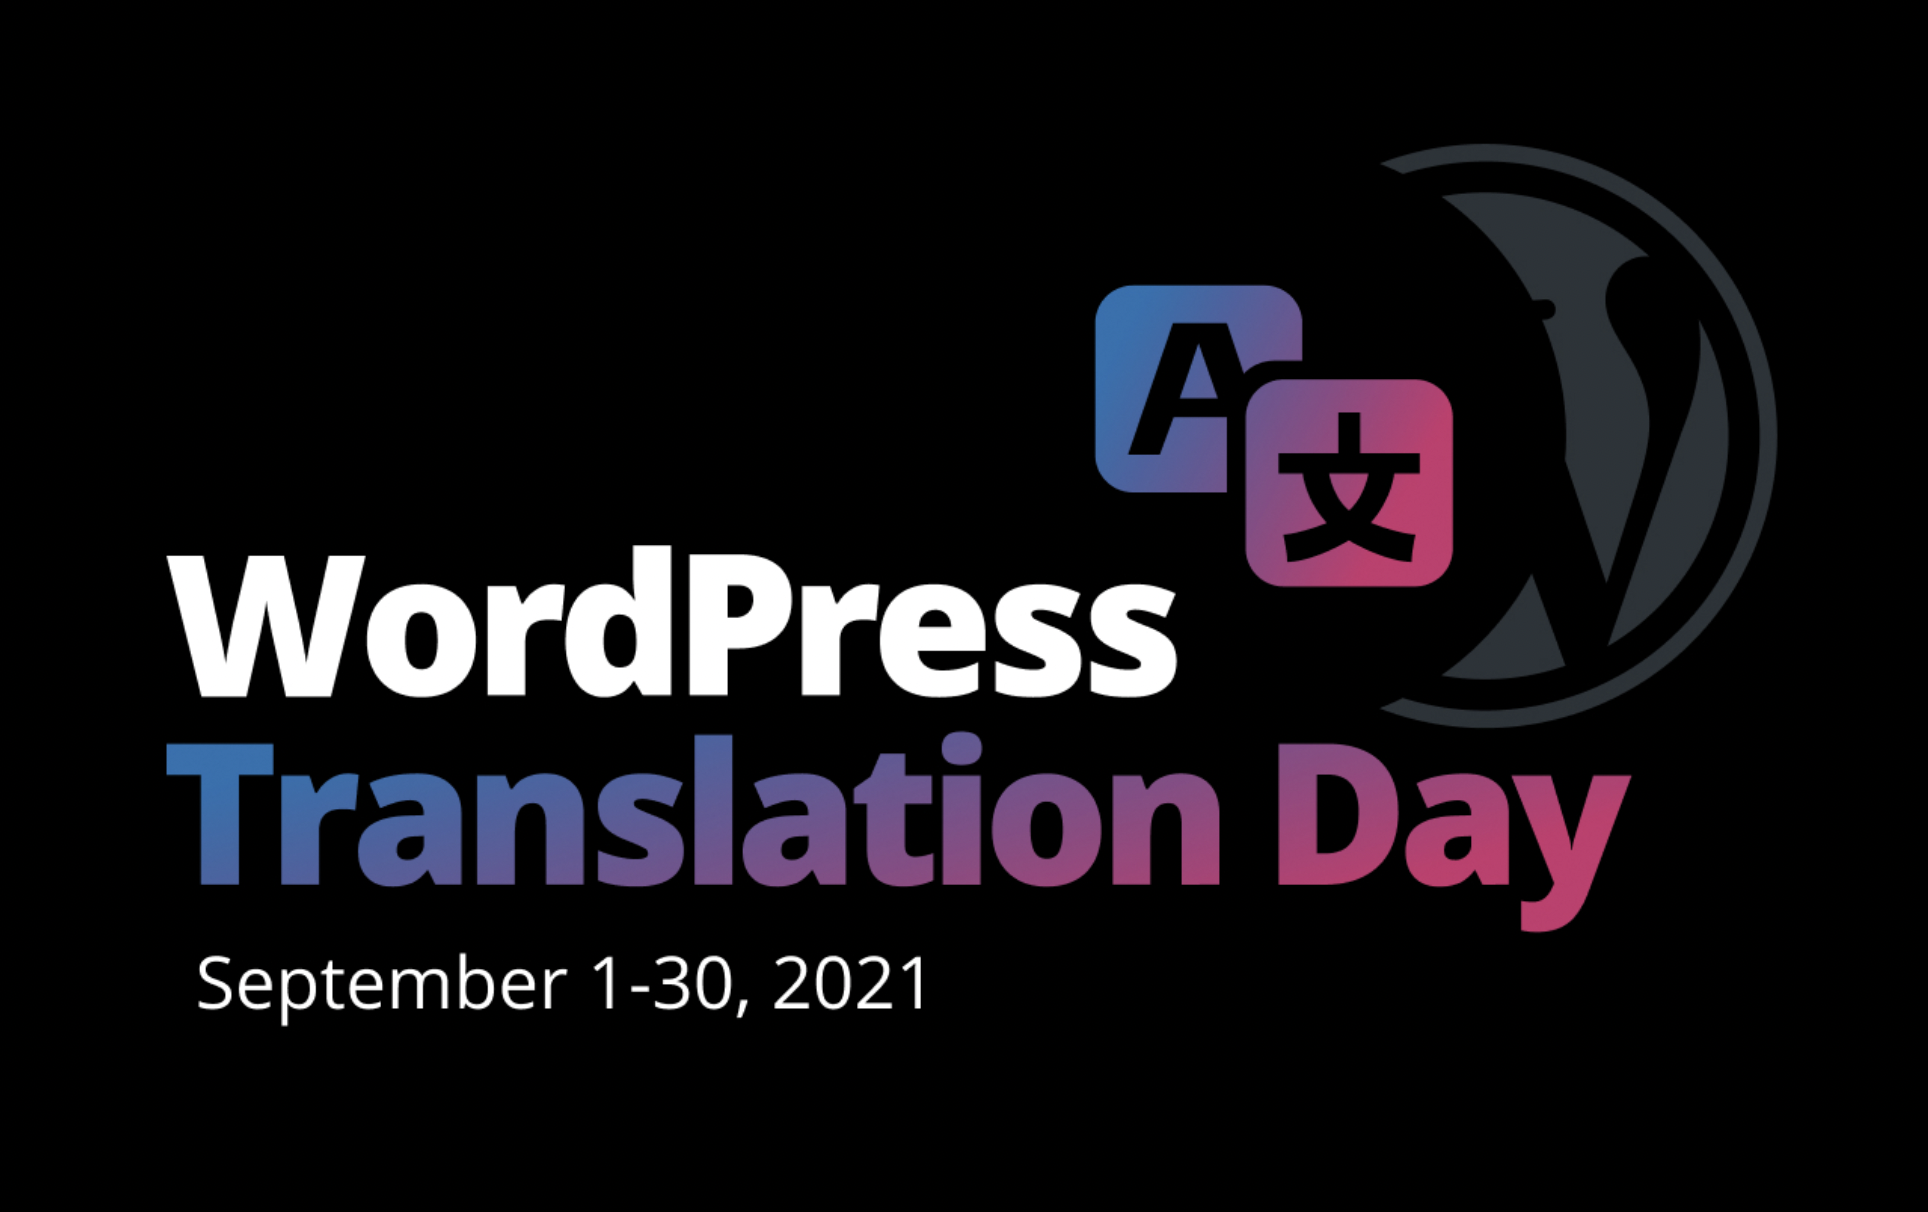 WordPress Translation Day 2021 Kicks Off September 1, Expanded to Month-Long Event